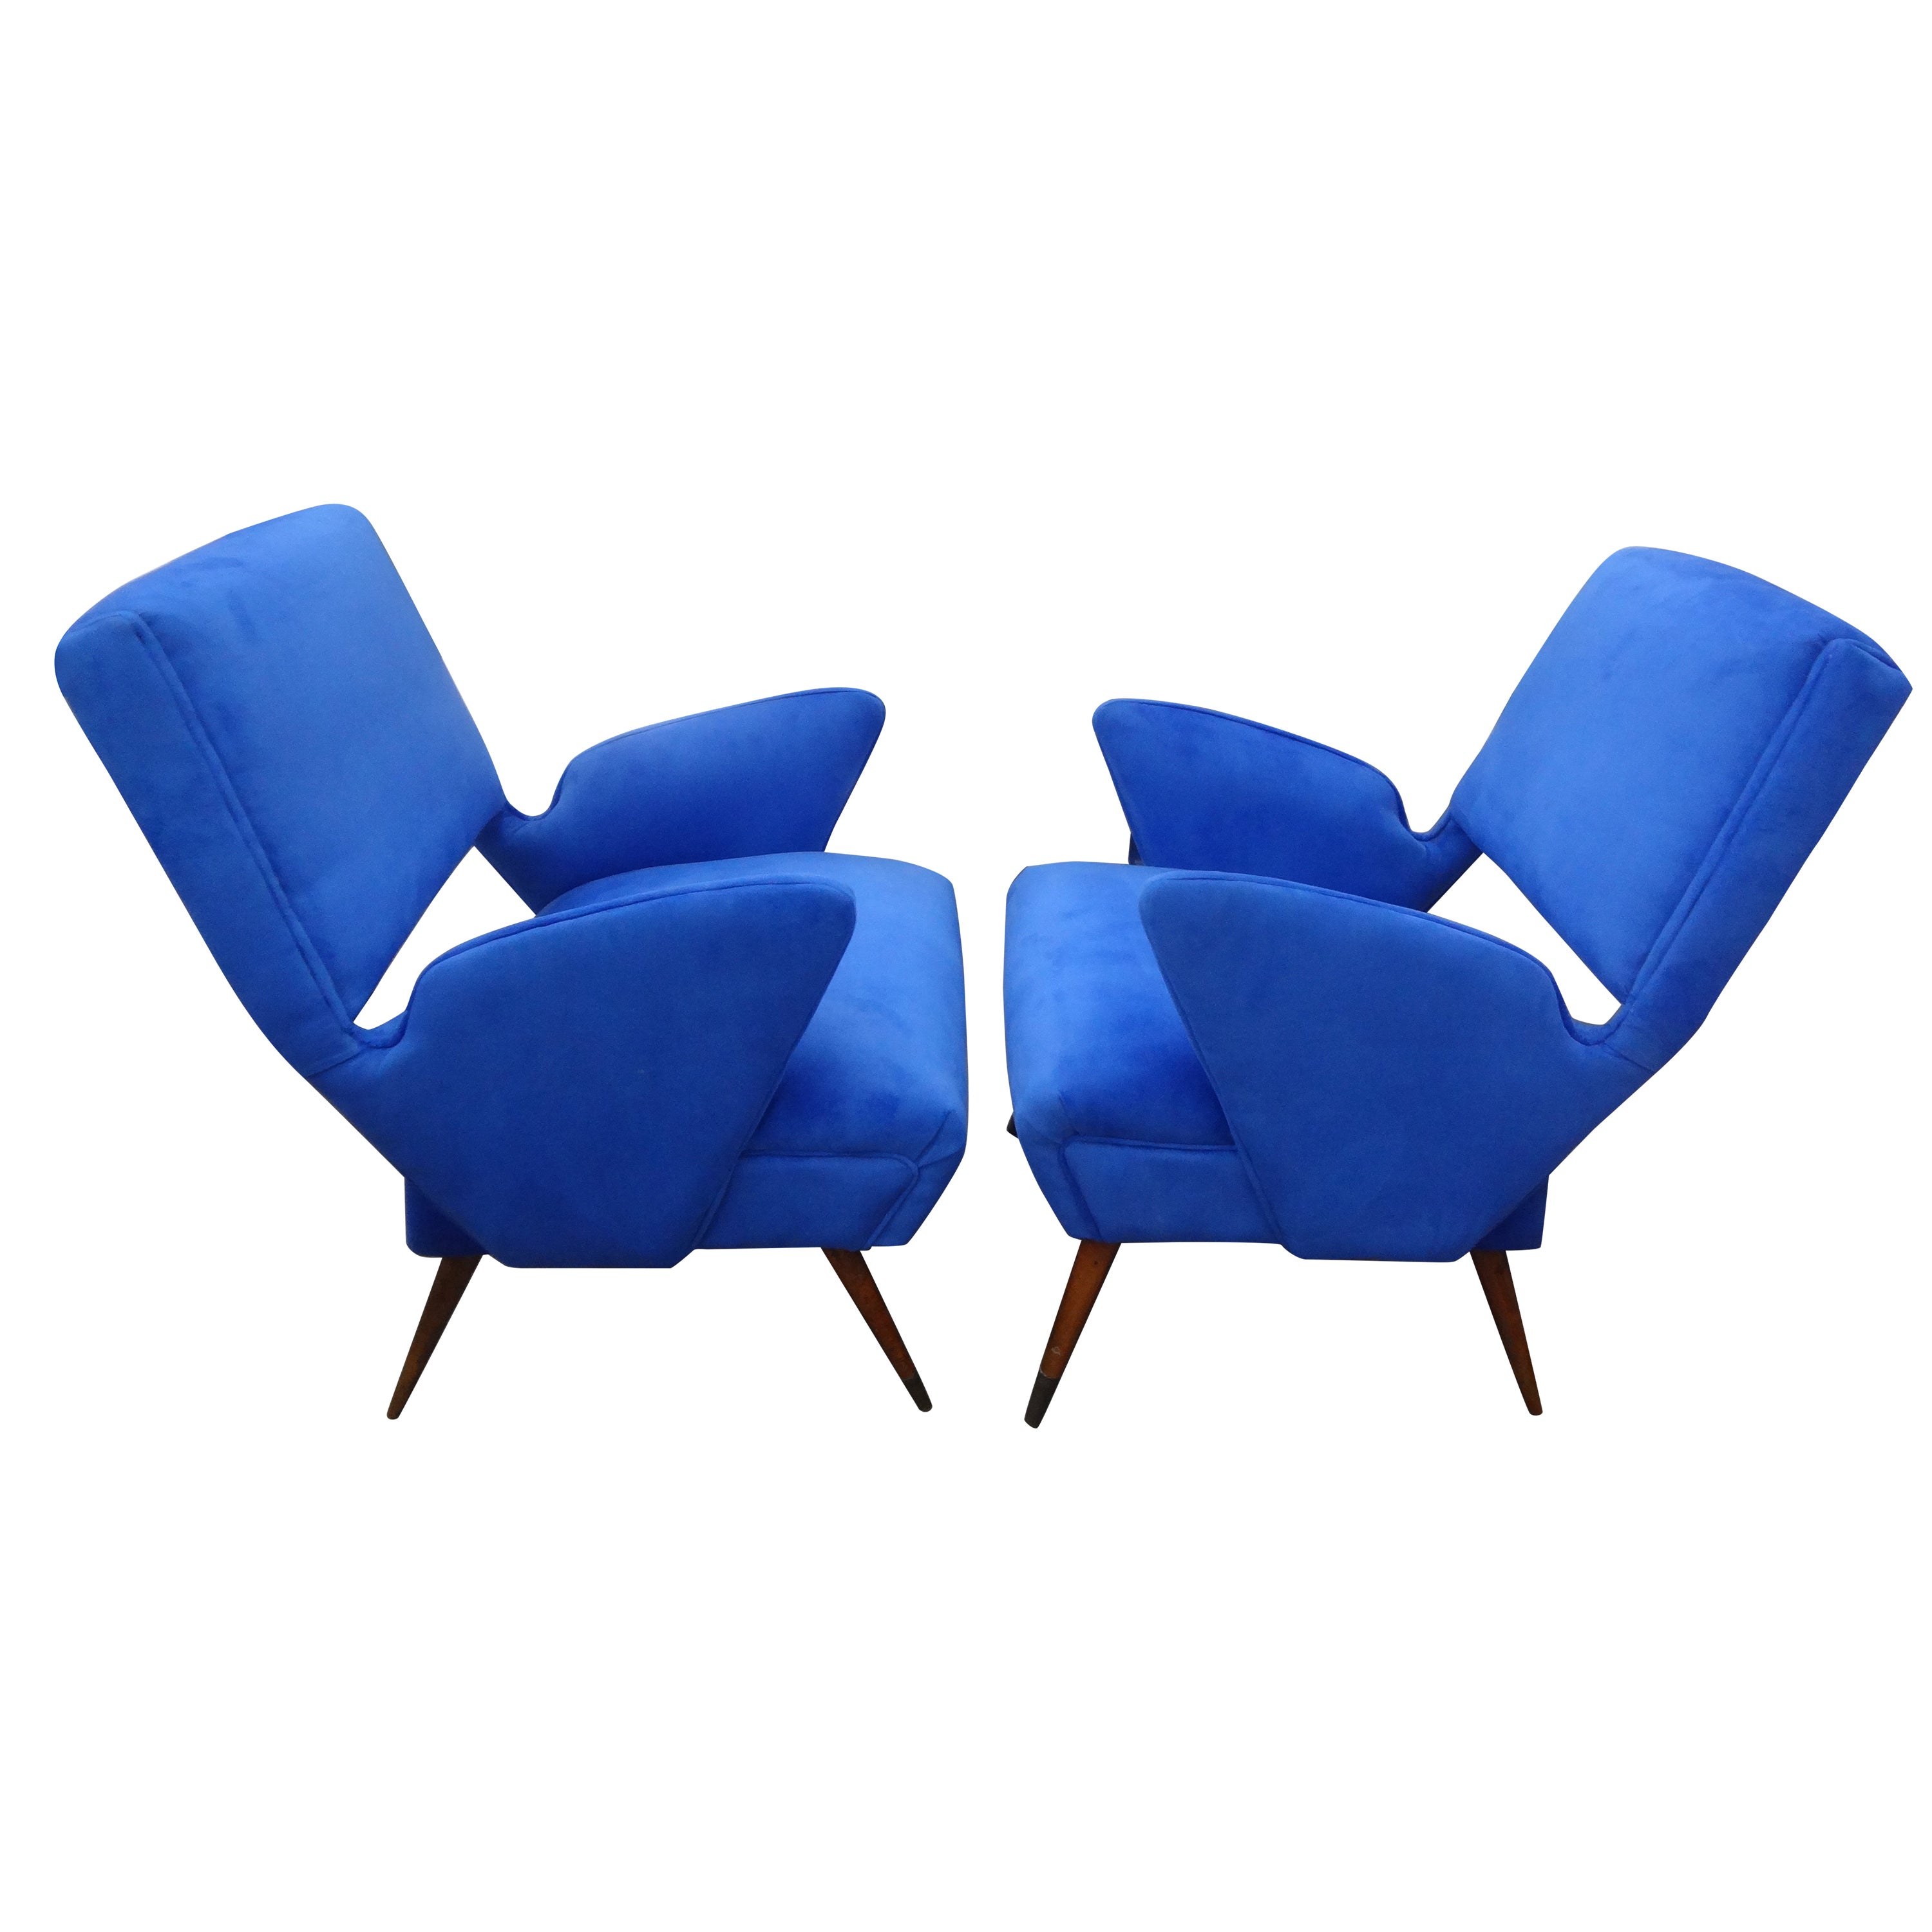 Pair of Italian Gio Ponti Inspired Lounge Chairs